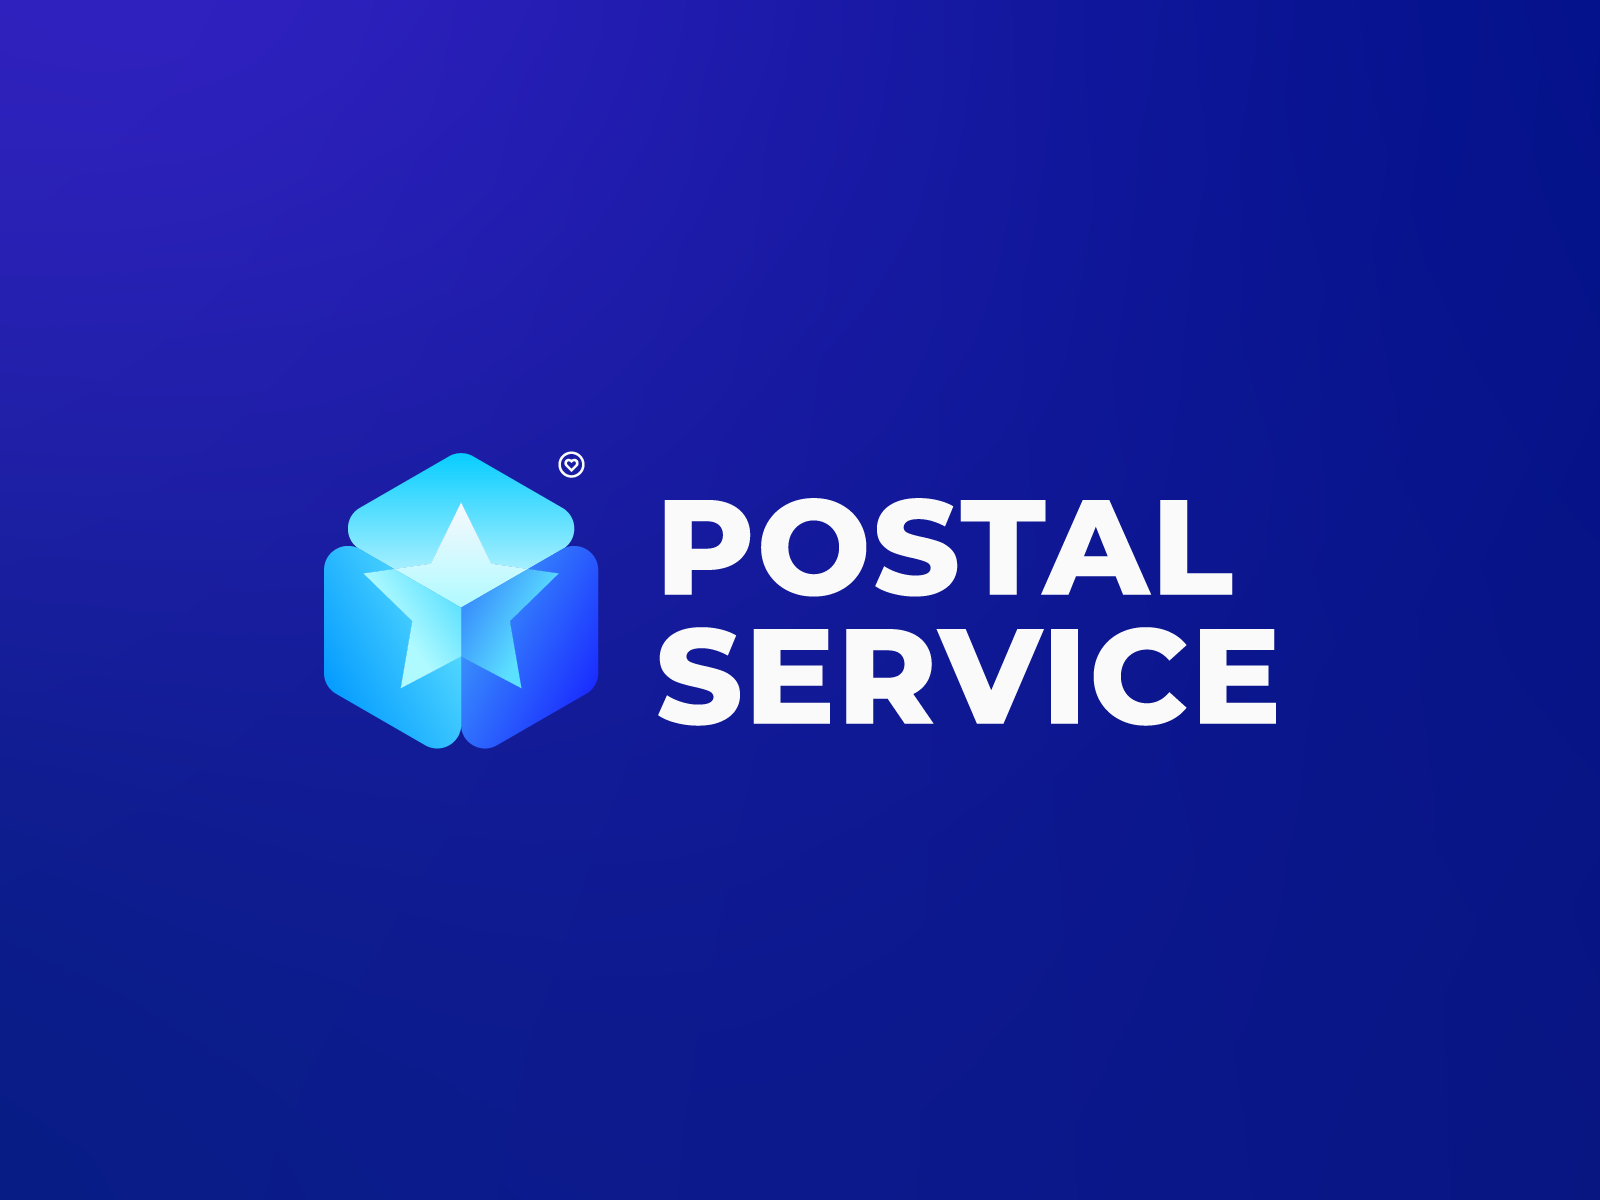 Post Office Logo PNG Transparent & SVG Vector - Freebie Supply